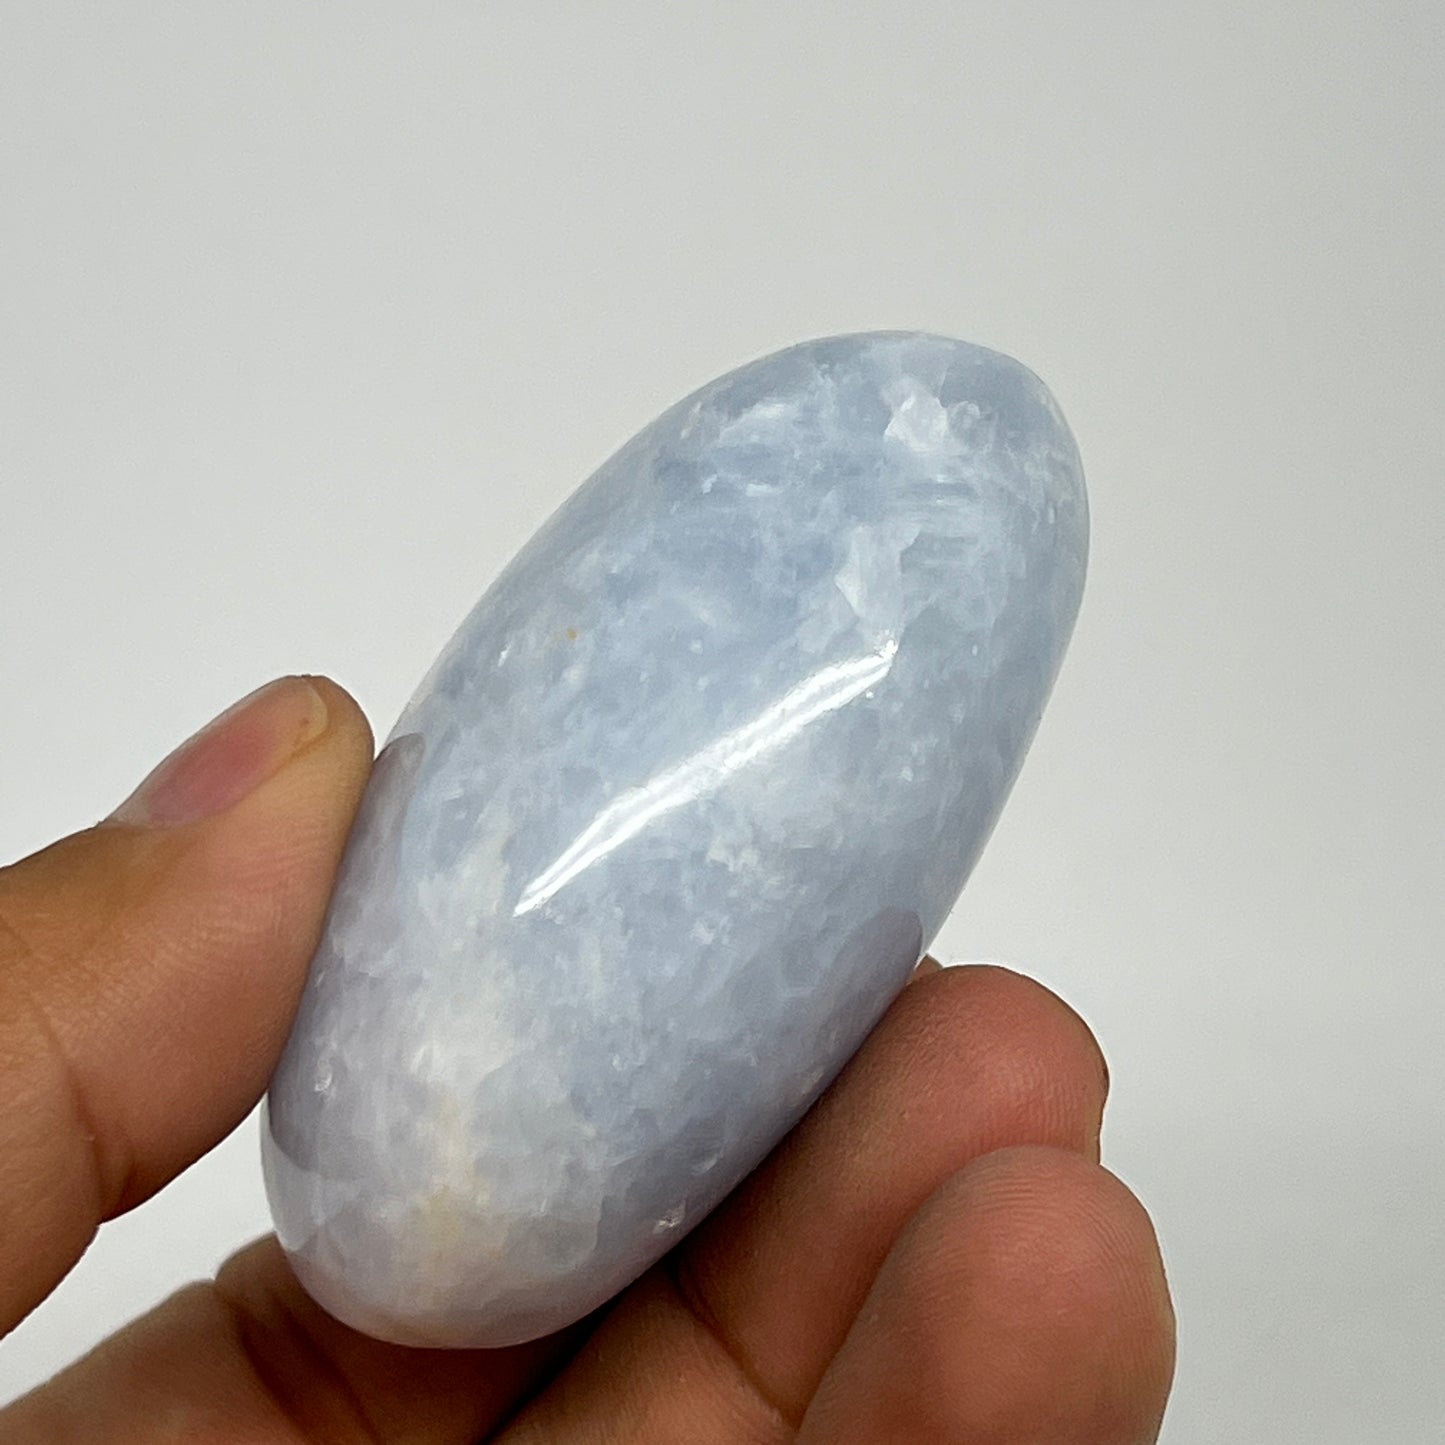 93.8g, 2.3"x1.6"x1.1" Blue Calcite Small Palm-Stone Tumbled @Madagascar, B20761